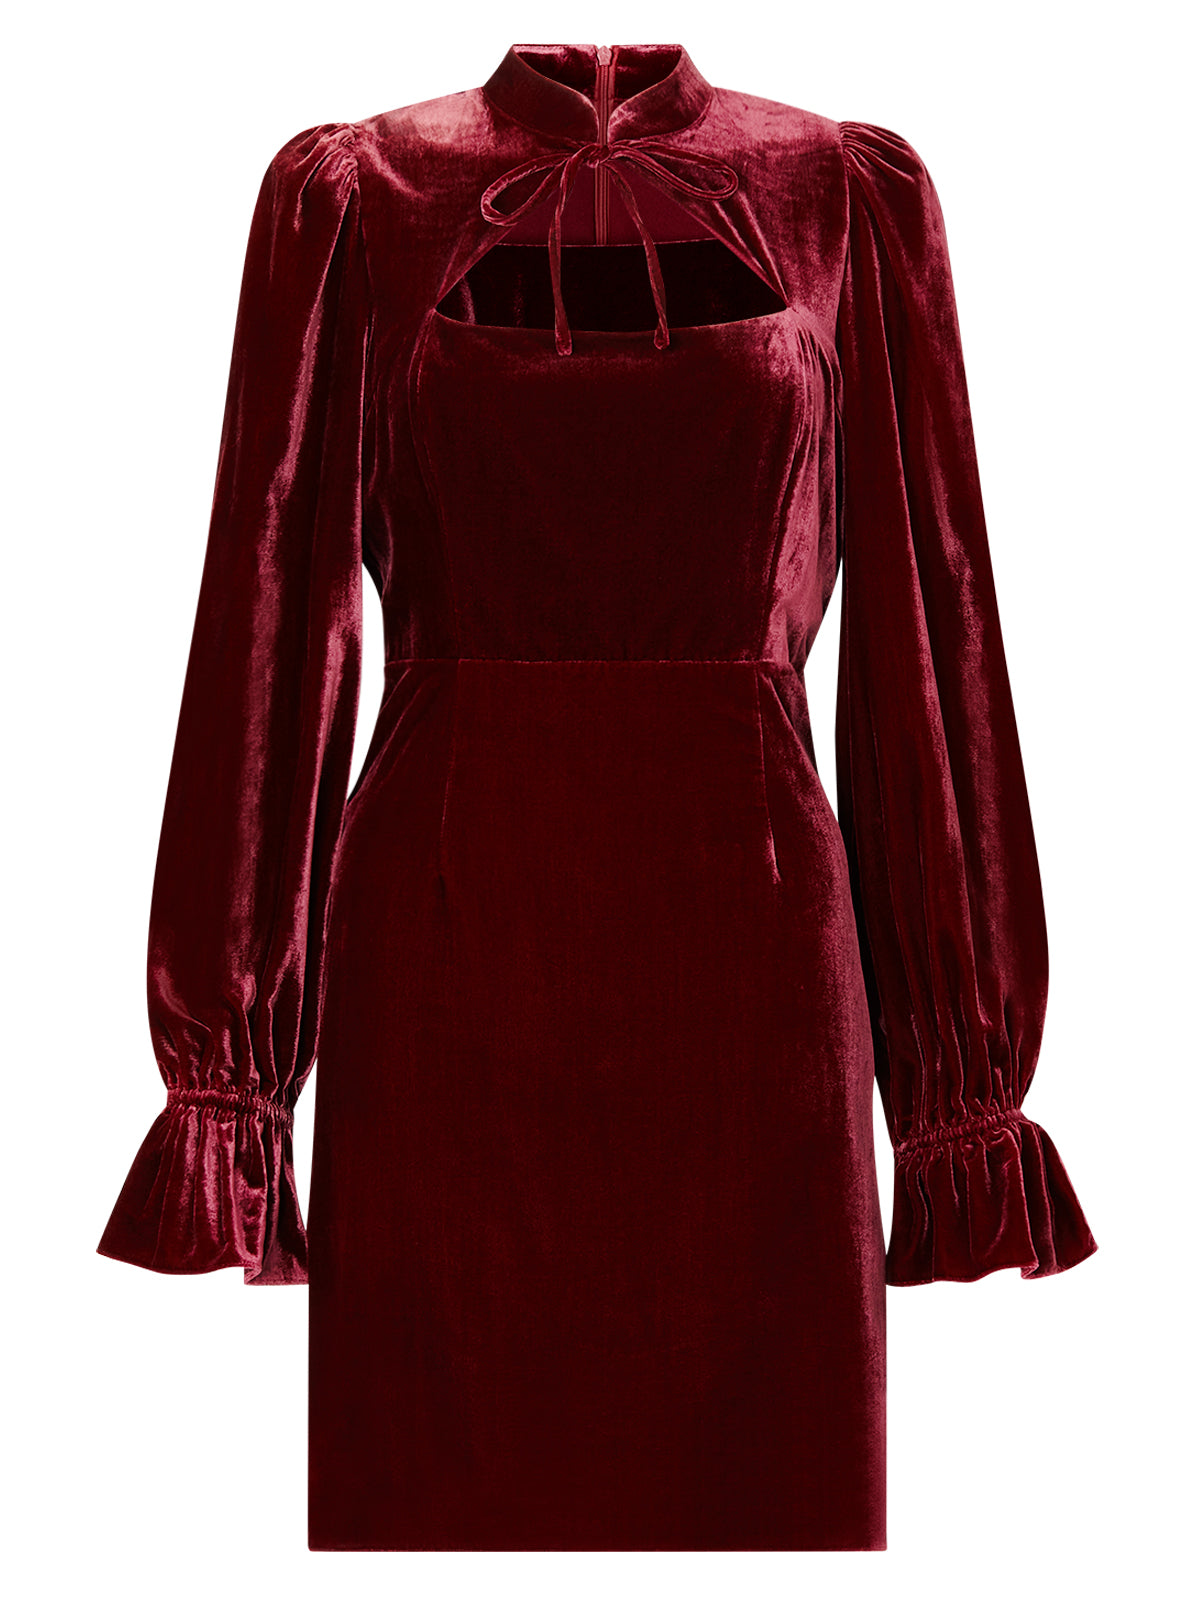 Valentina Burgundy Velvet Mini Dress By KITRI Studio